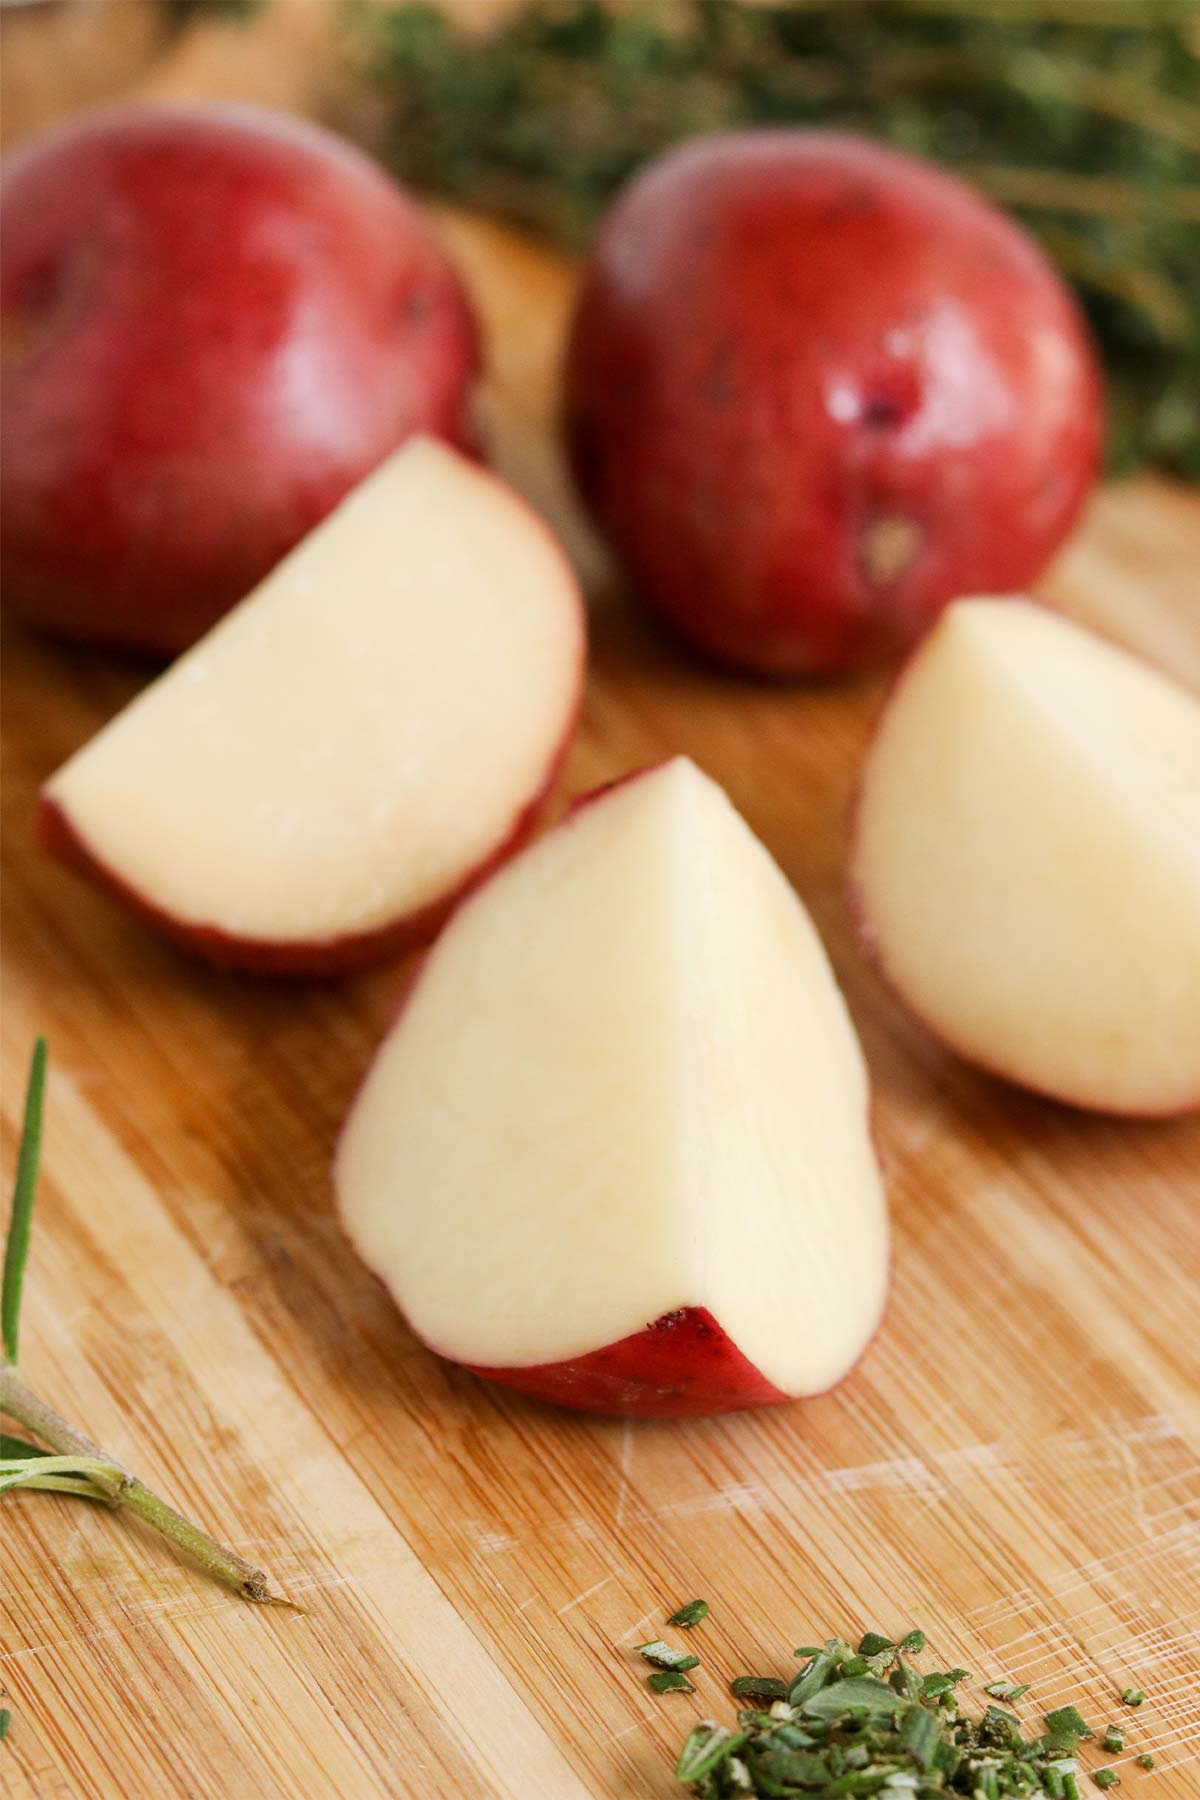 Red potatoes cut on a cutting board.